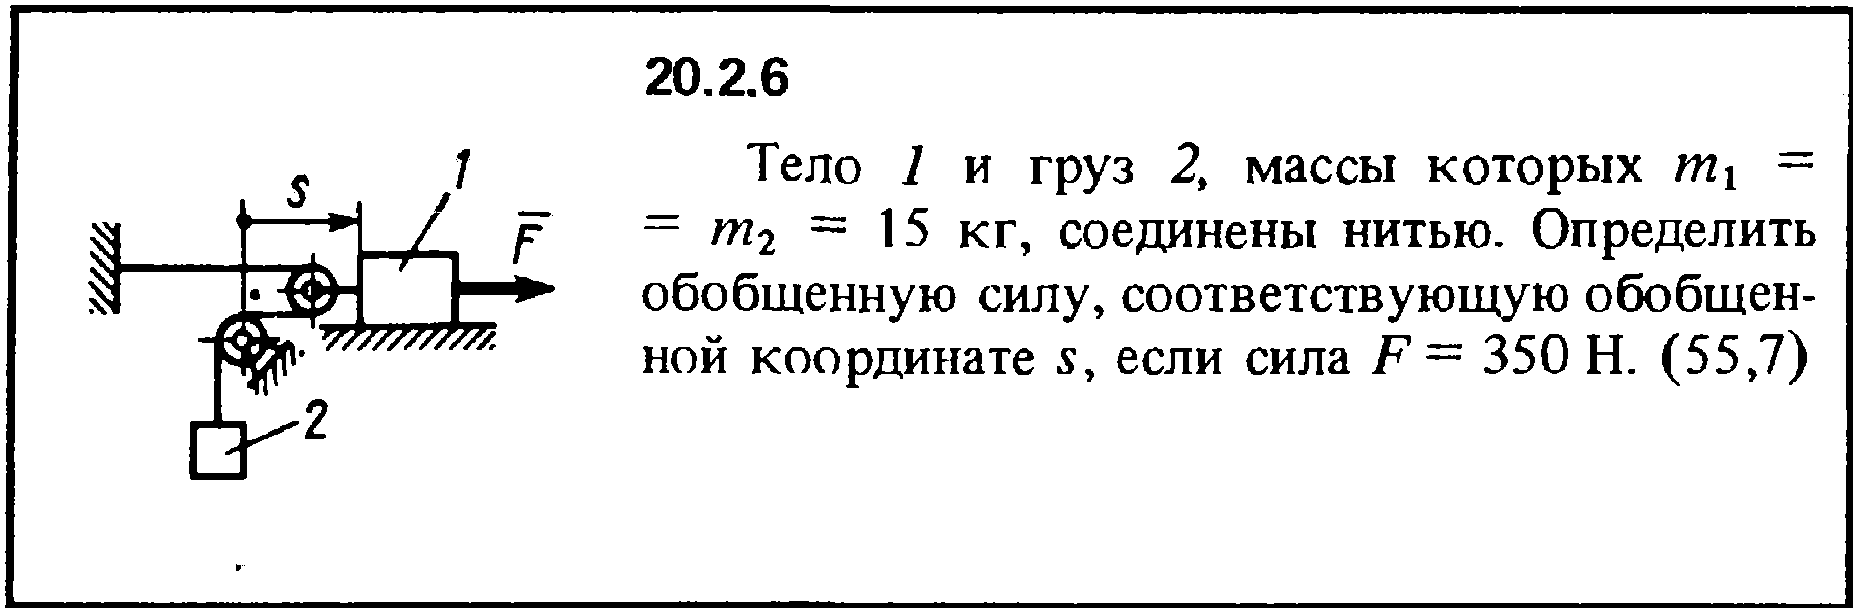 Решение 20.2.6 из сборника (решебника) Кепе О.Е. 1989